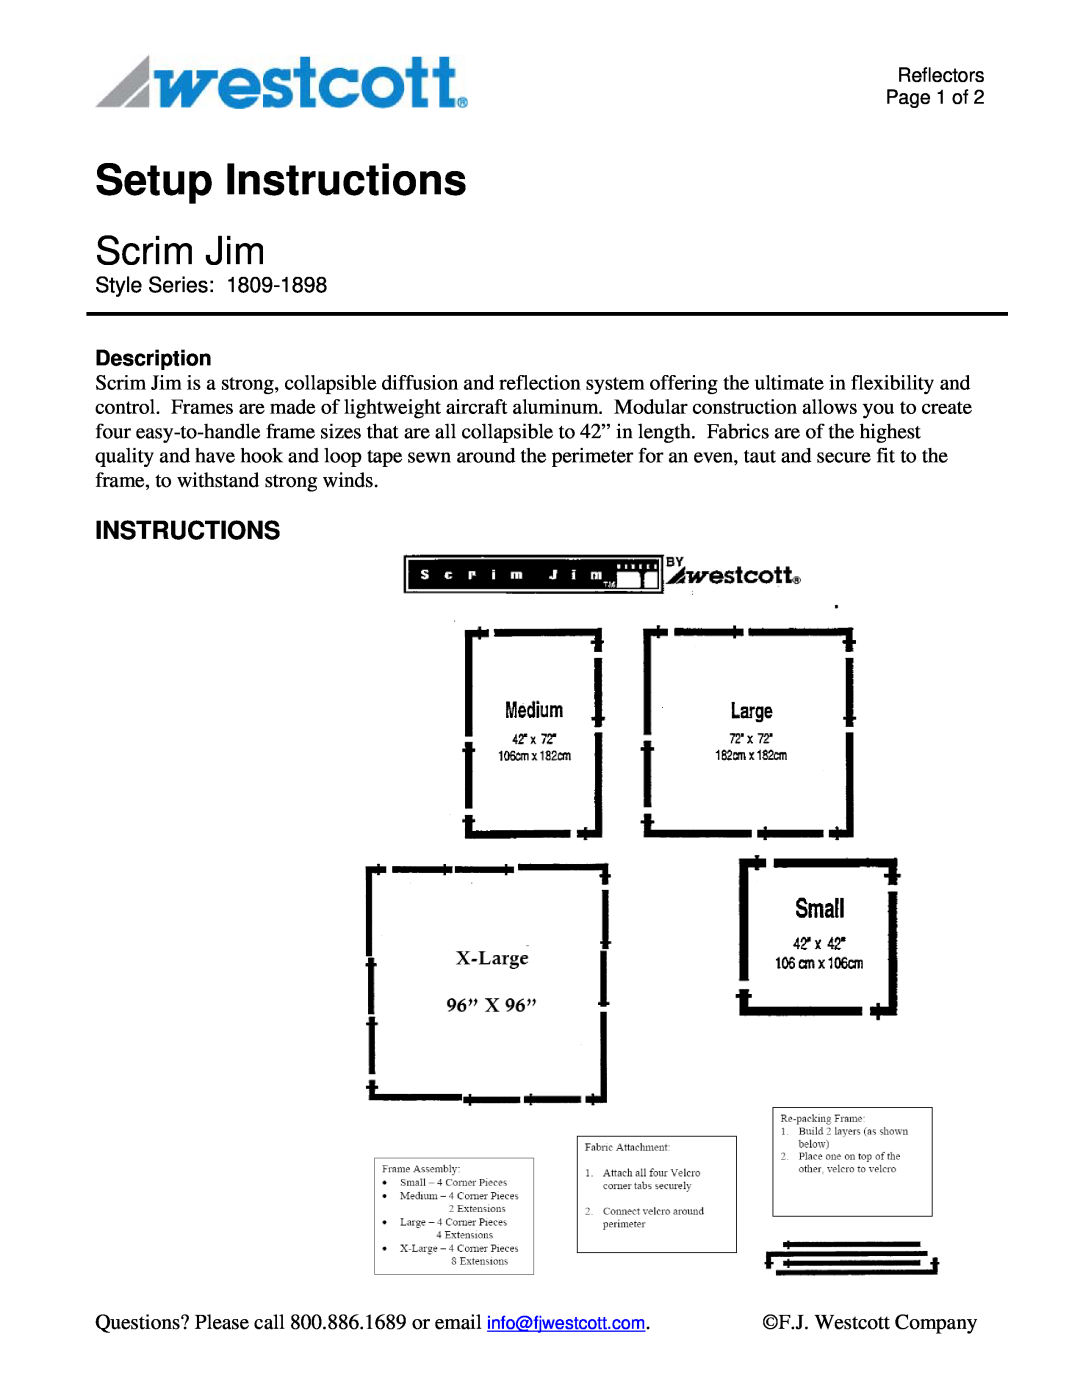 Westcott 1819 manual Setup Instructions, Scrim Jim, Description 